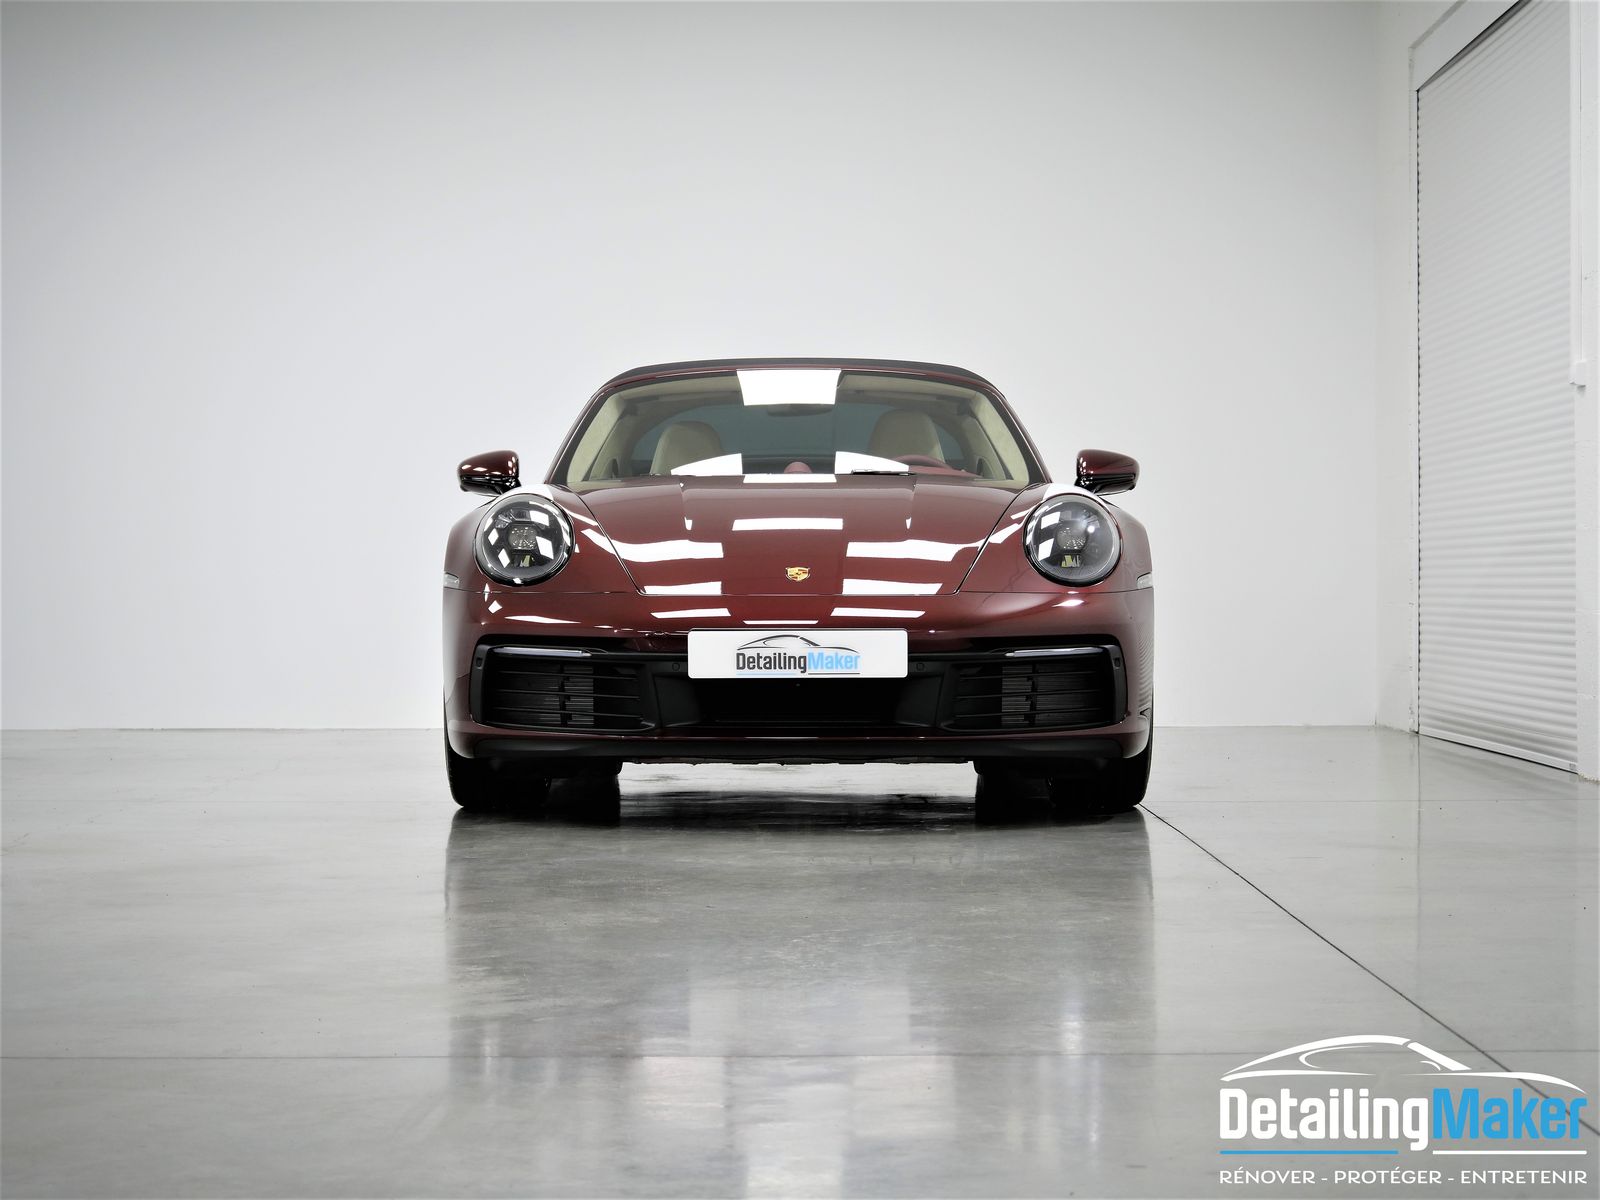 Film de protection carrosserie sur Porsche 911 Targa 4S Heritage Design Edition